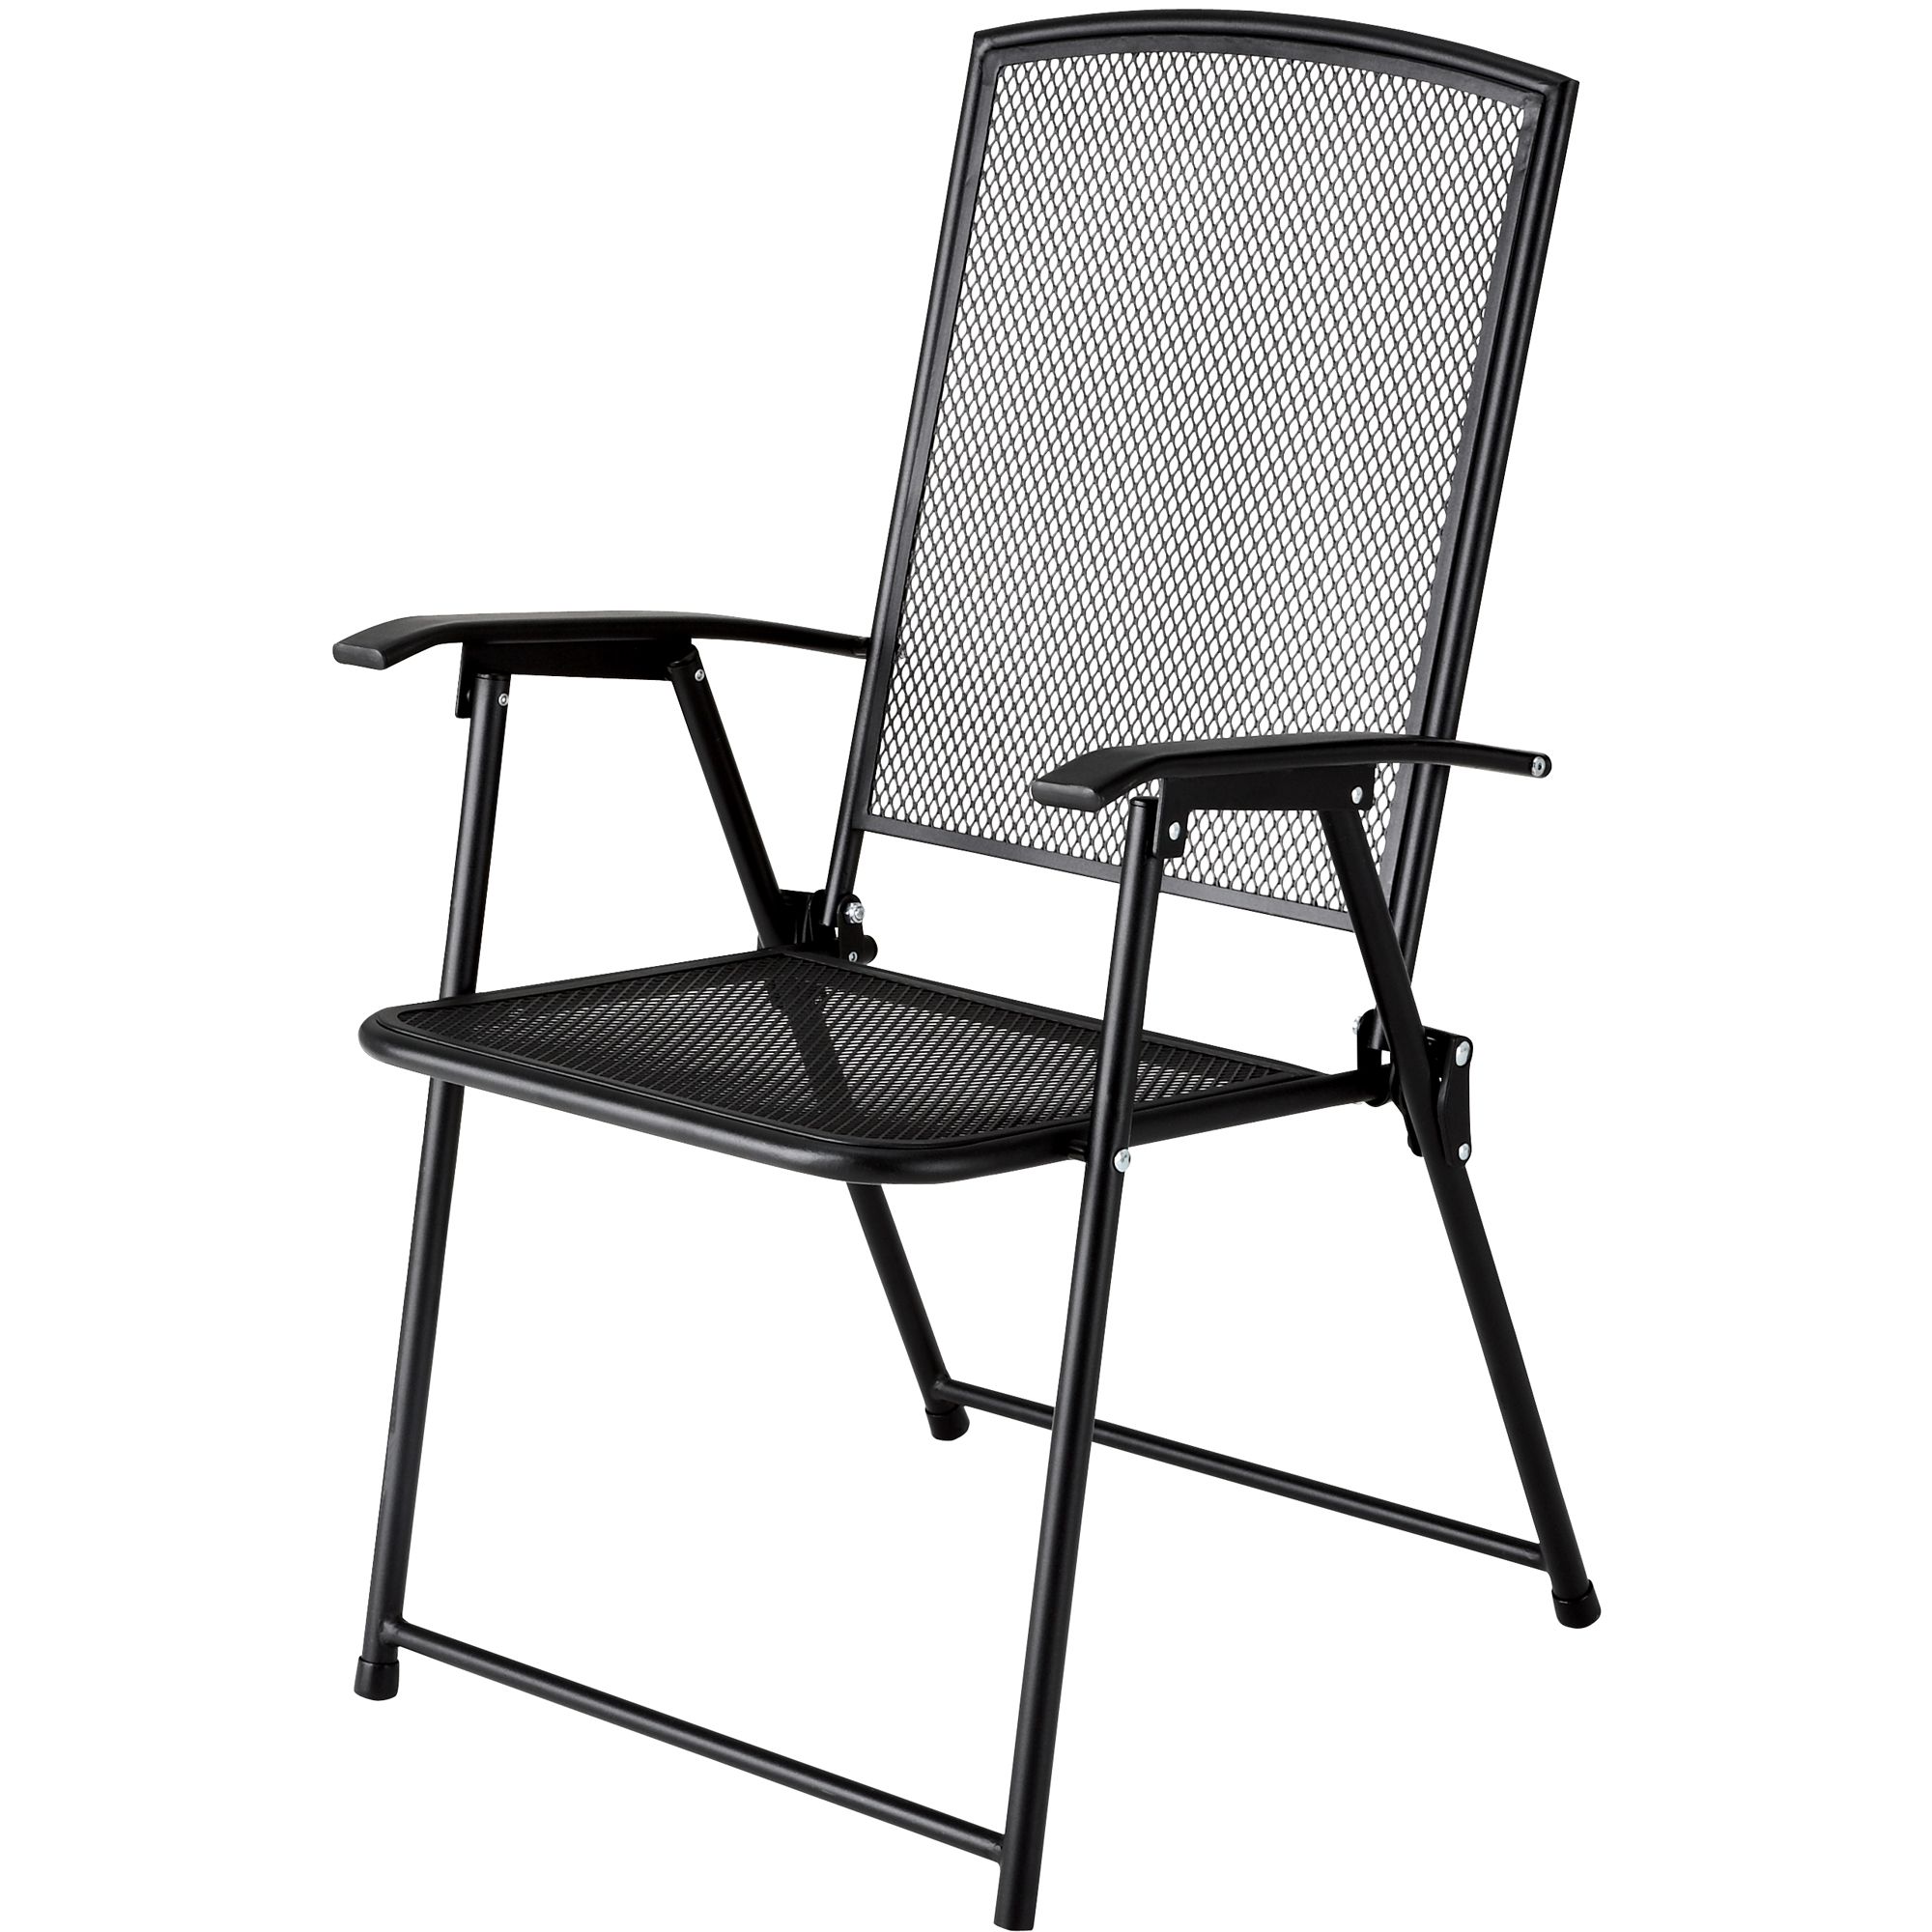 New folding patio chair lovely patio ideas on patio door curtains folding patio chairs